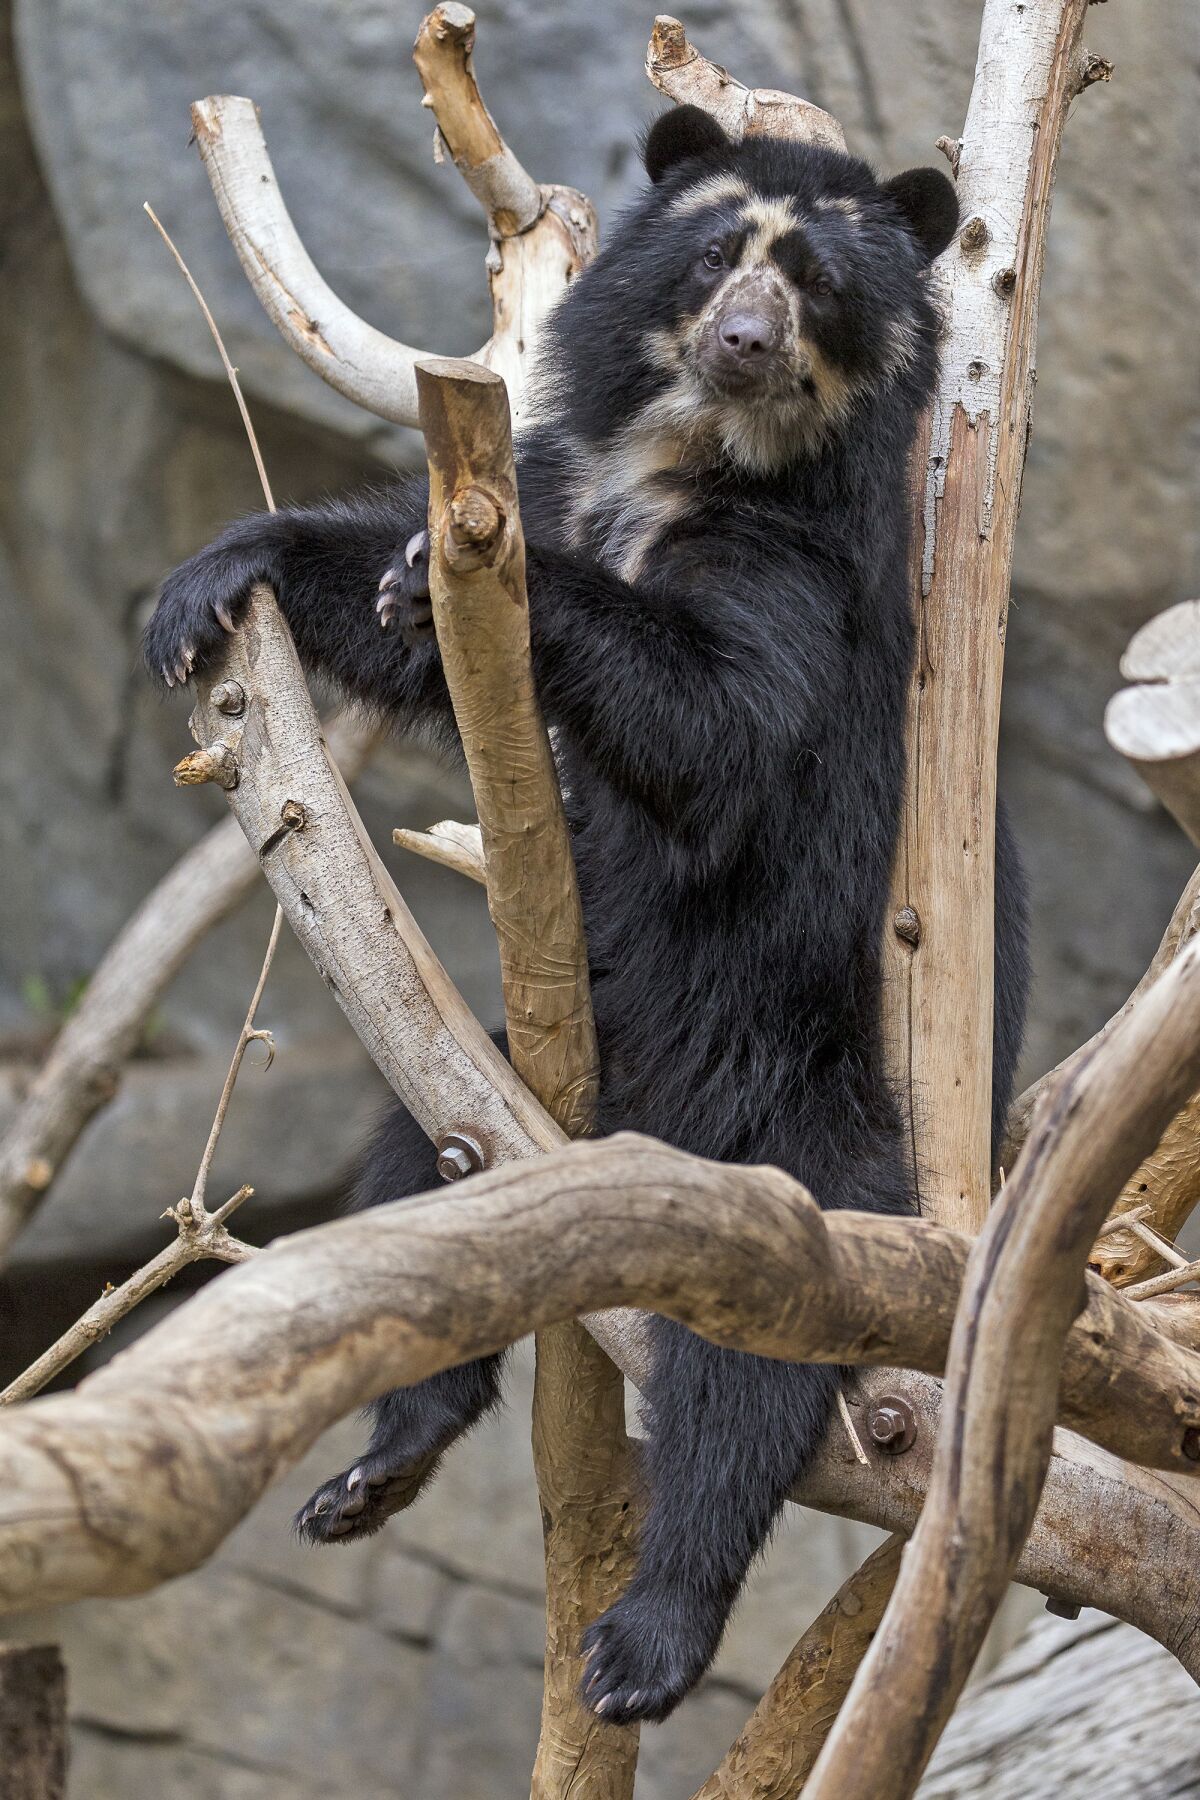 Alba, an Andean bear, gave birth to a cub at the San Diego Zoo last week.